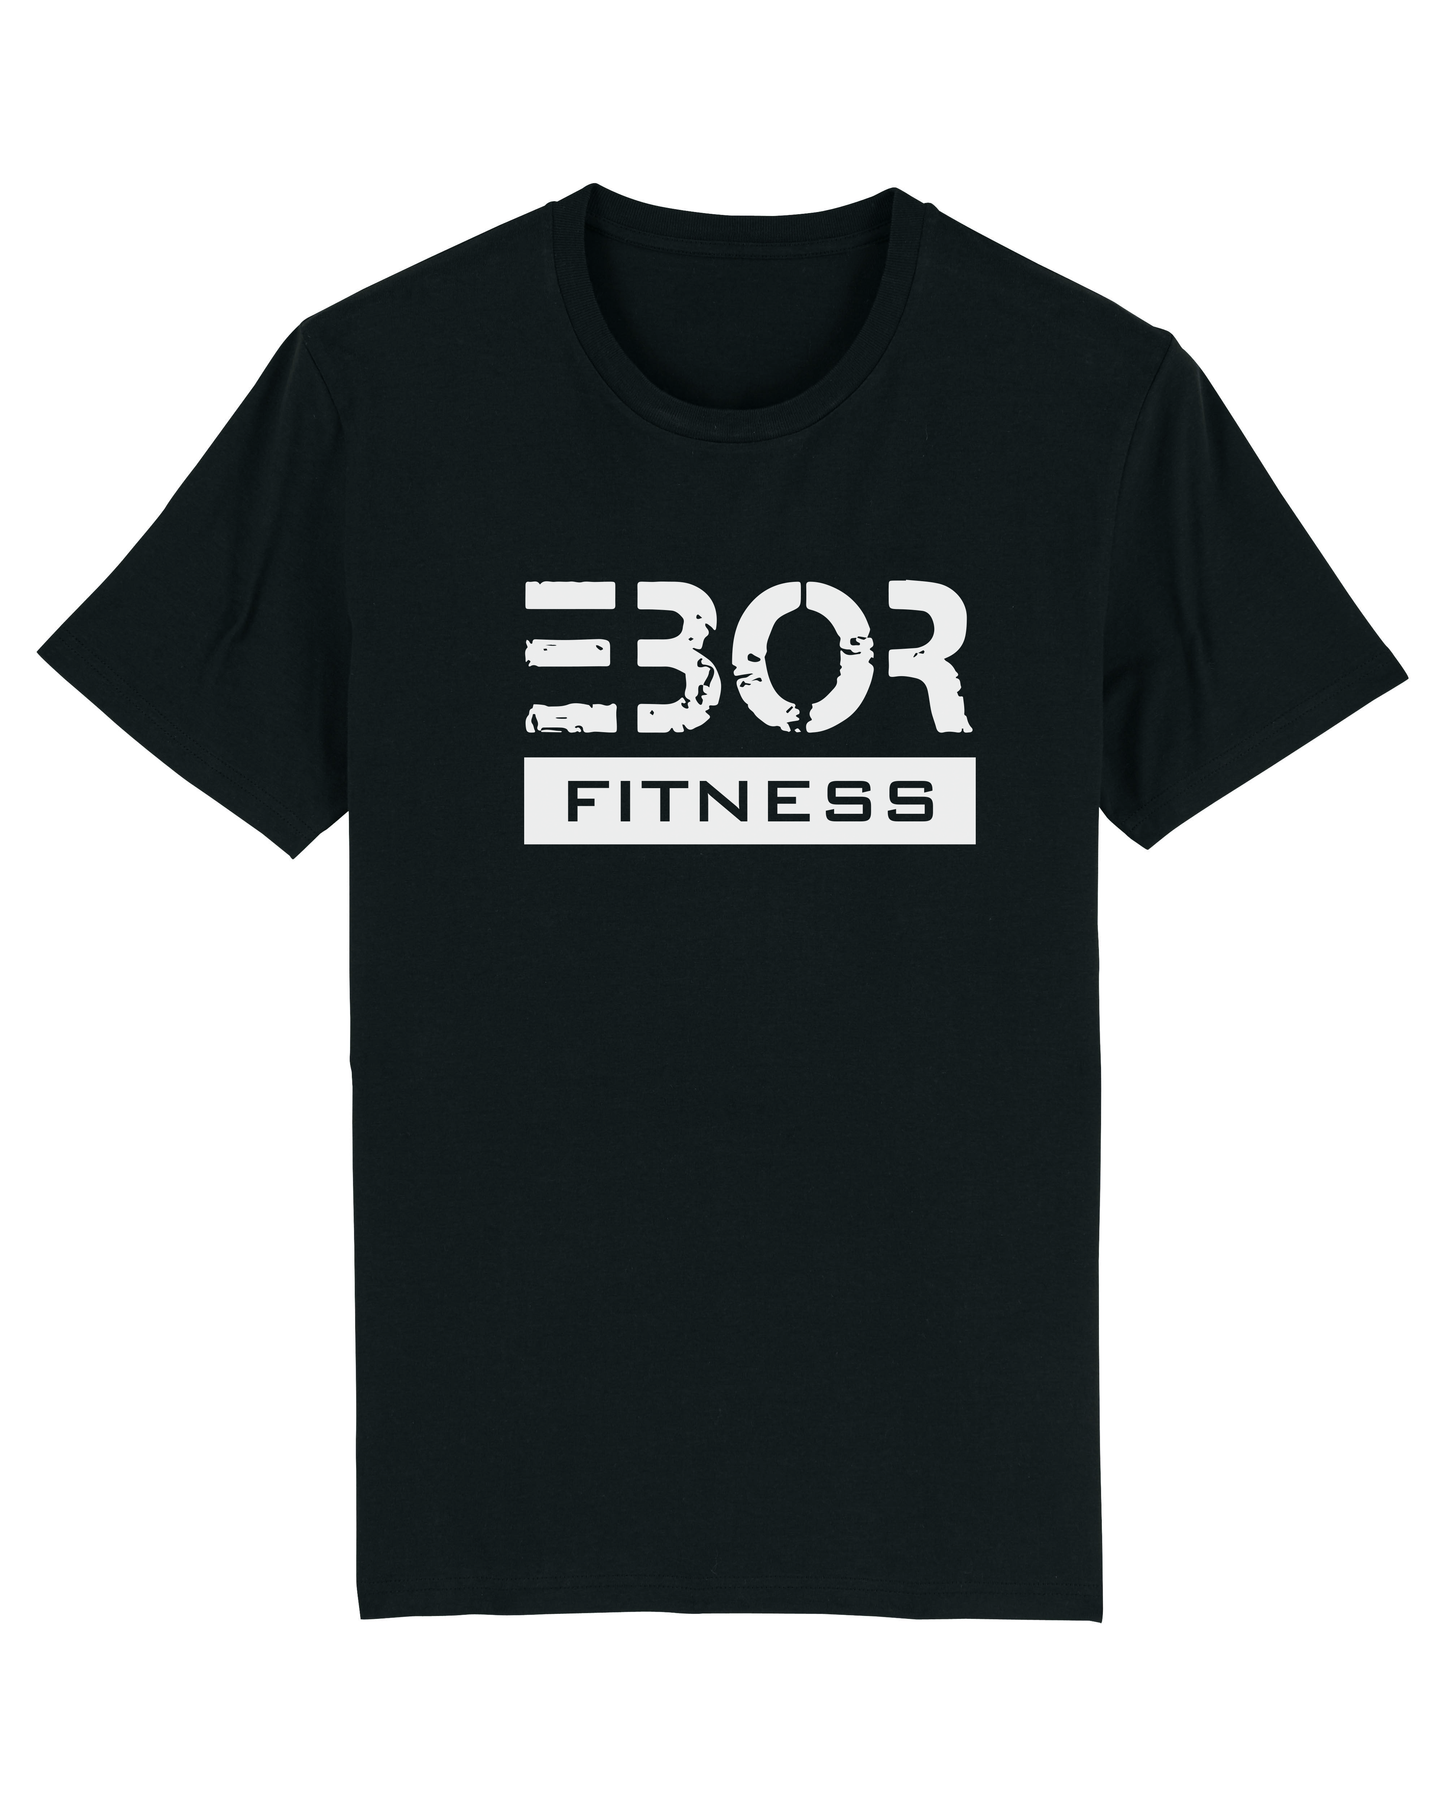 Ebor Fitness T-shirt